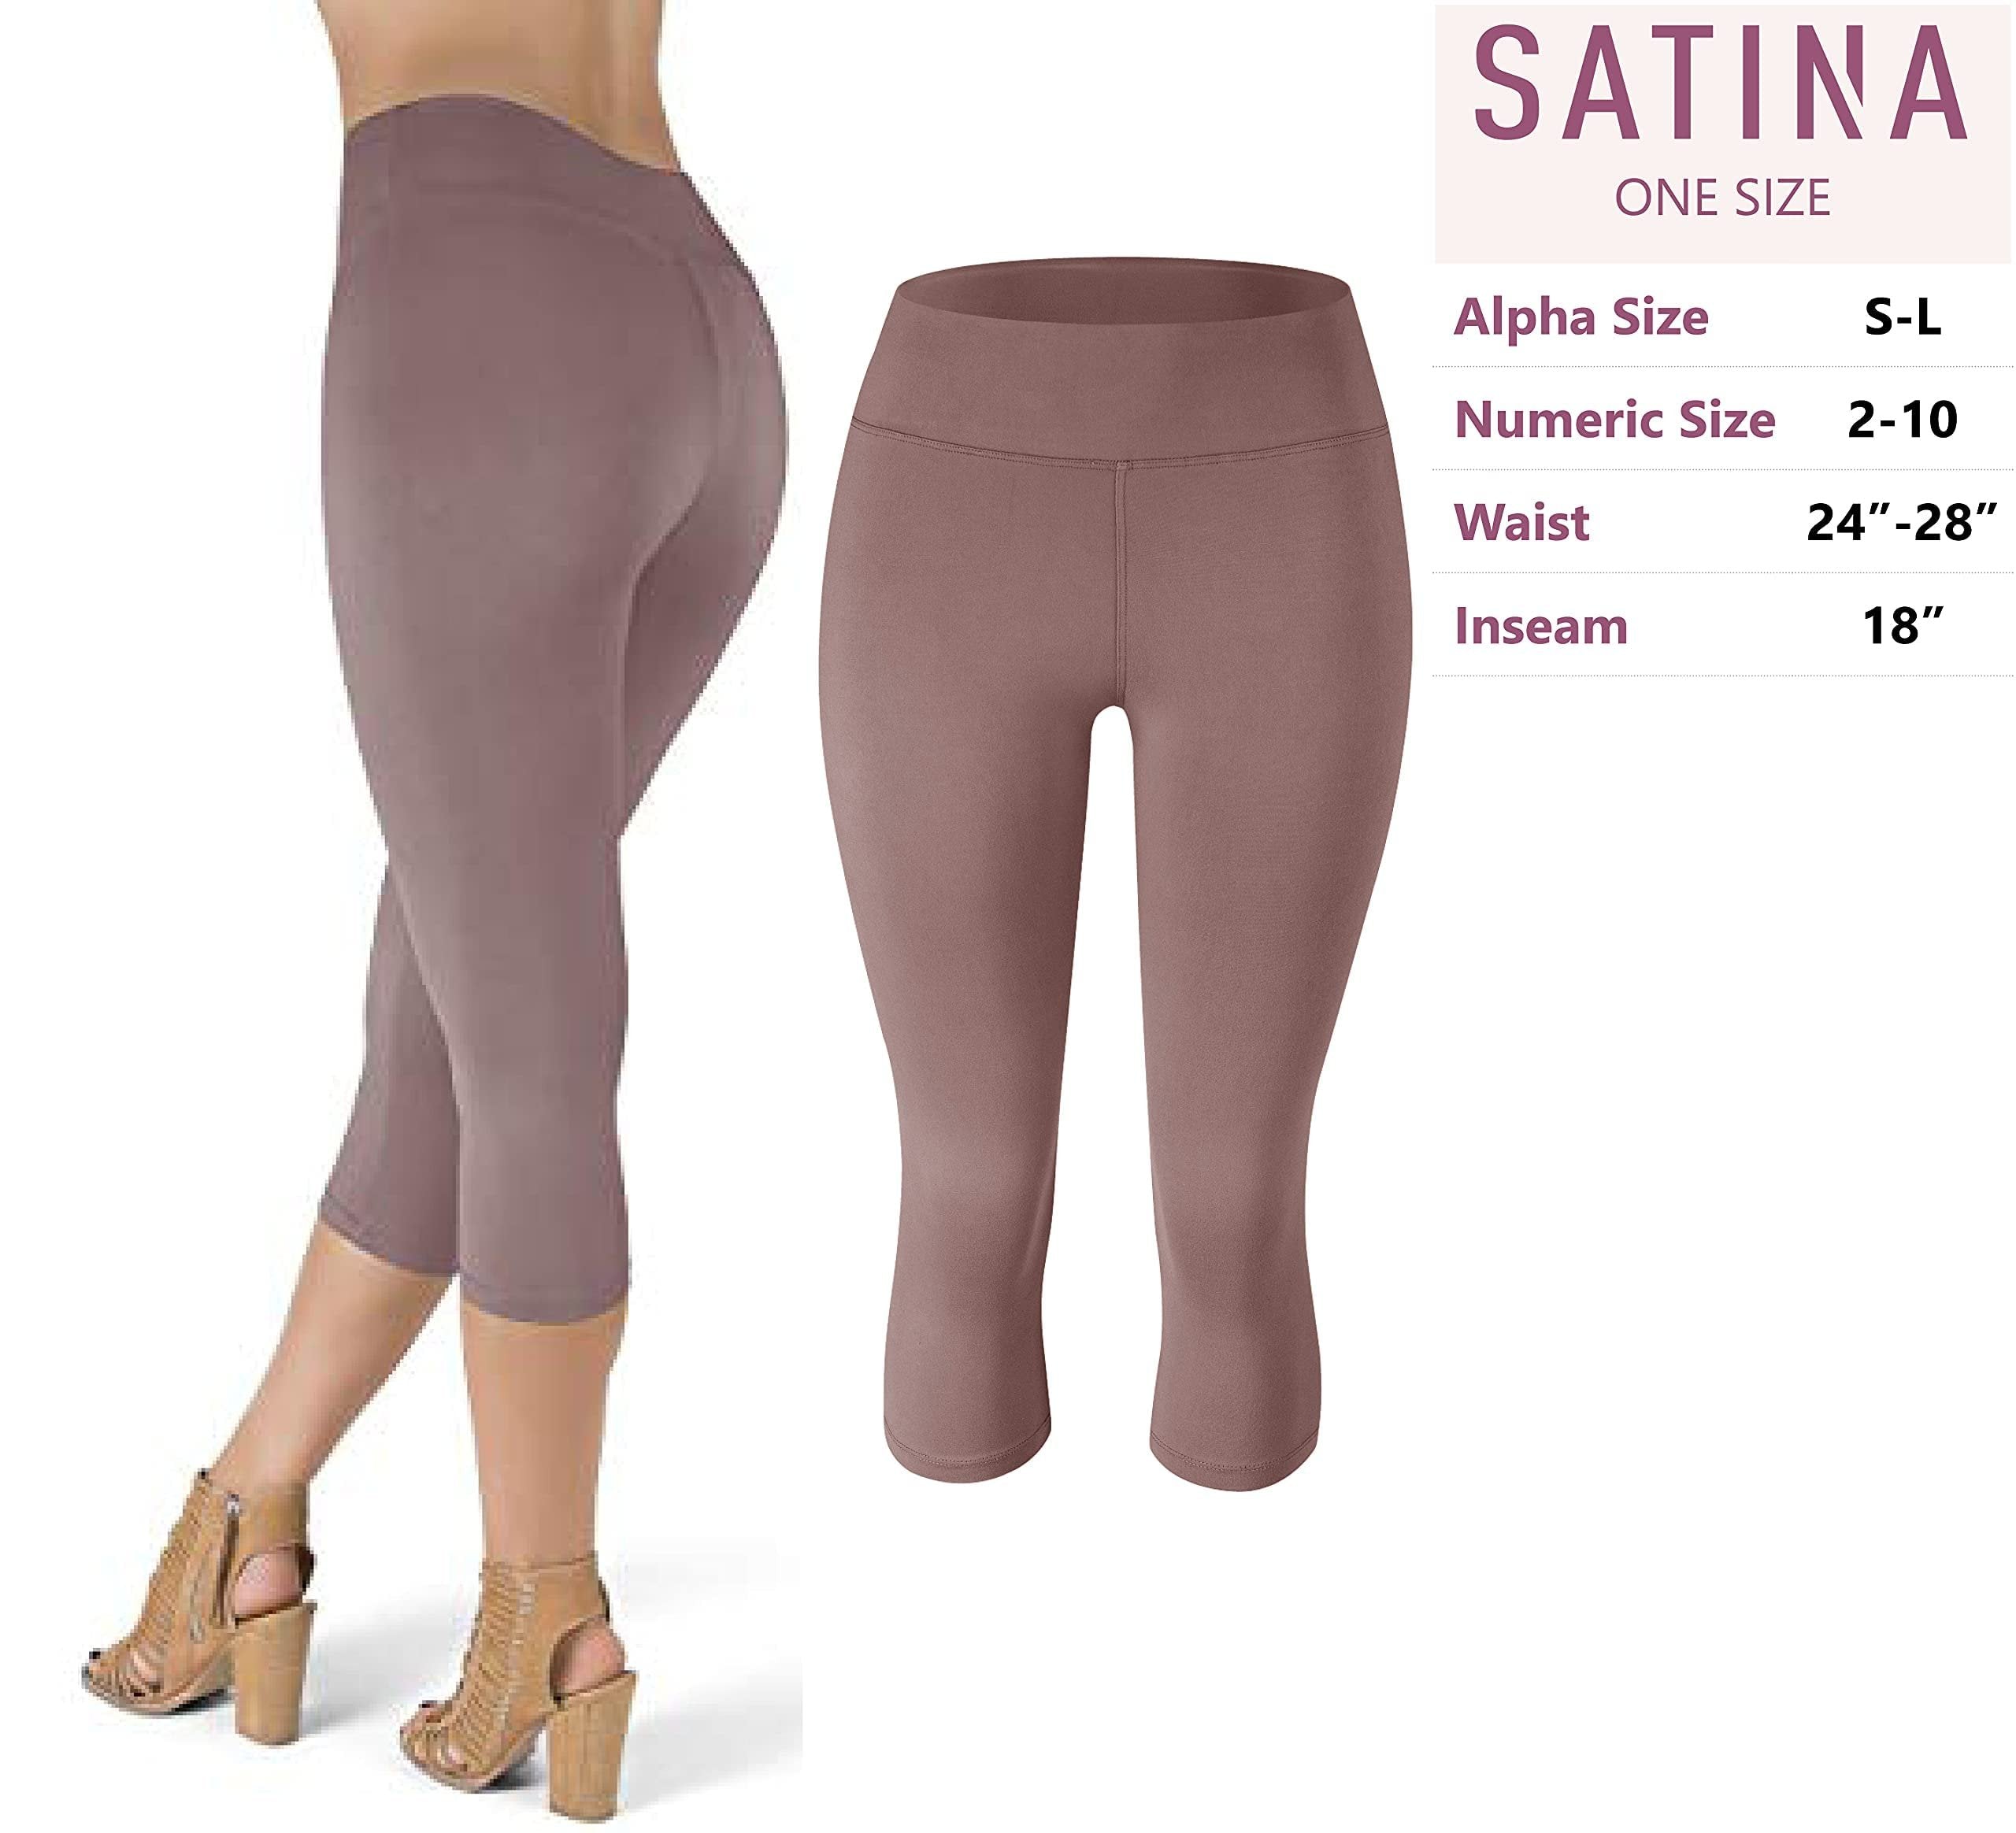 SATINA High Waisted Yoga Leggings - Mauve, Straight, One Size with 3 Inch Waistband